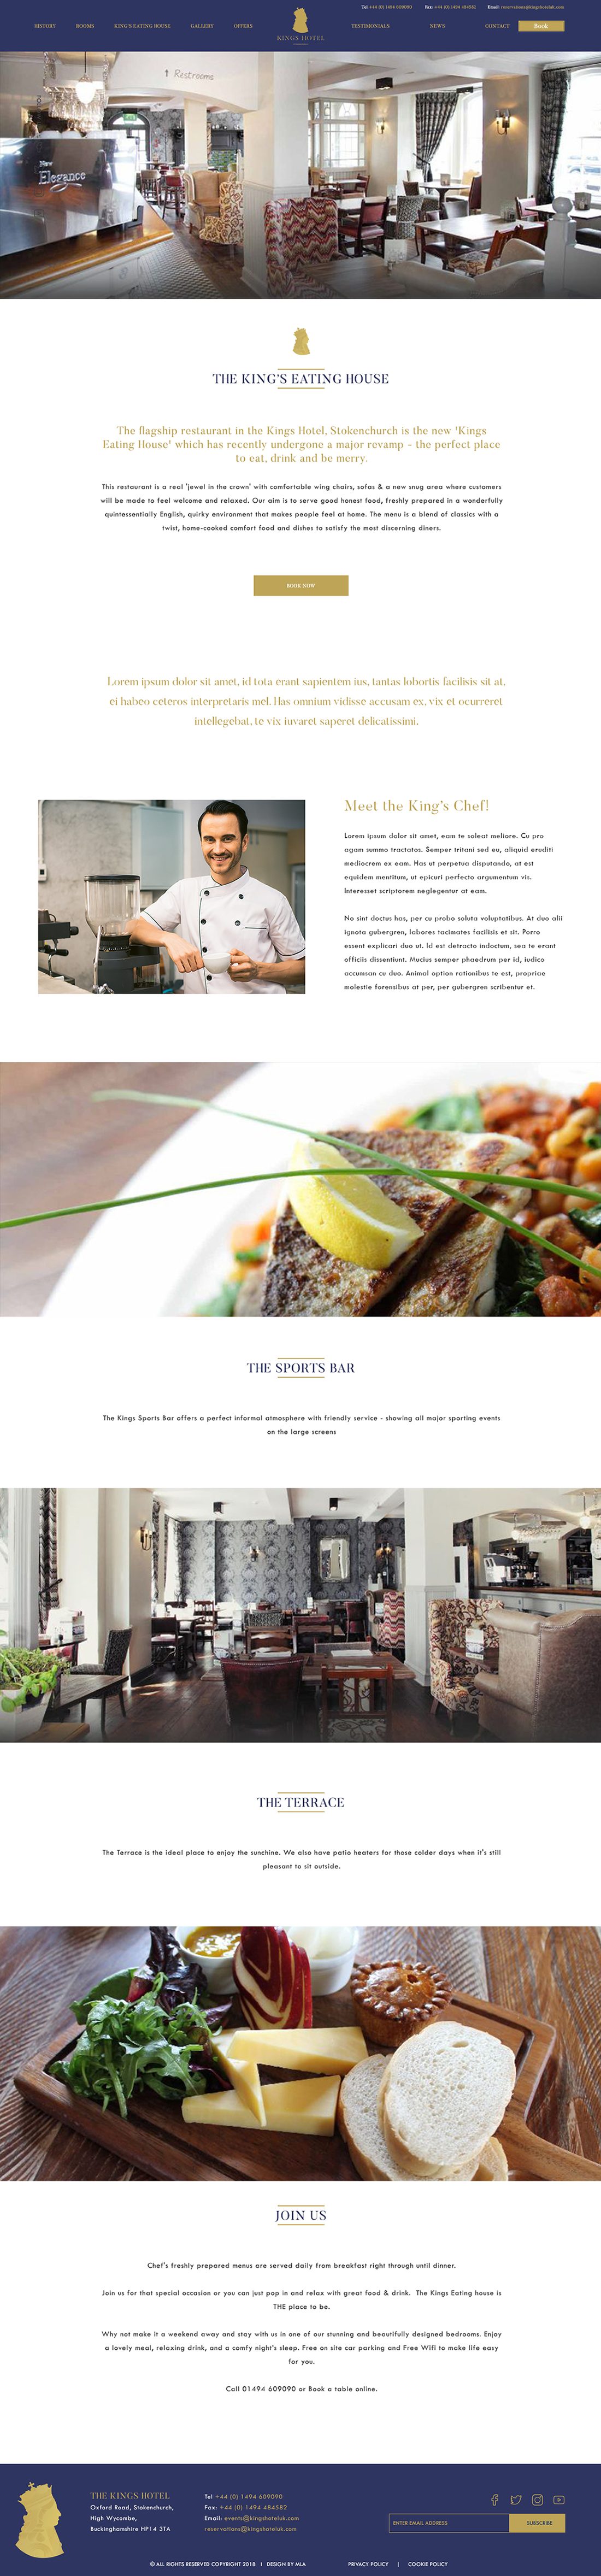 The Kings Hotel restaurant page - Web design London - web design agency london